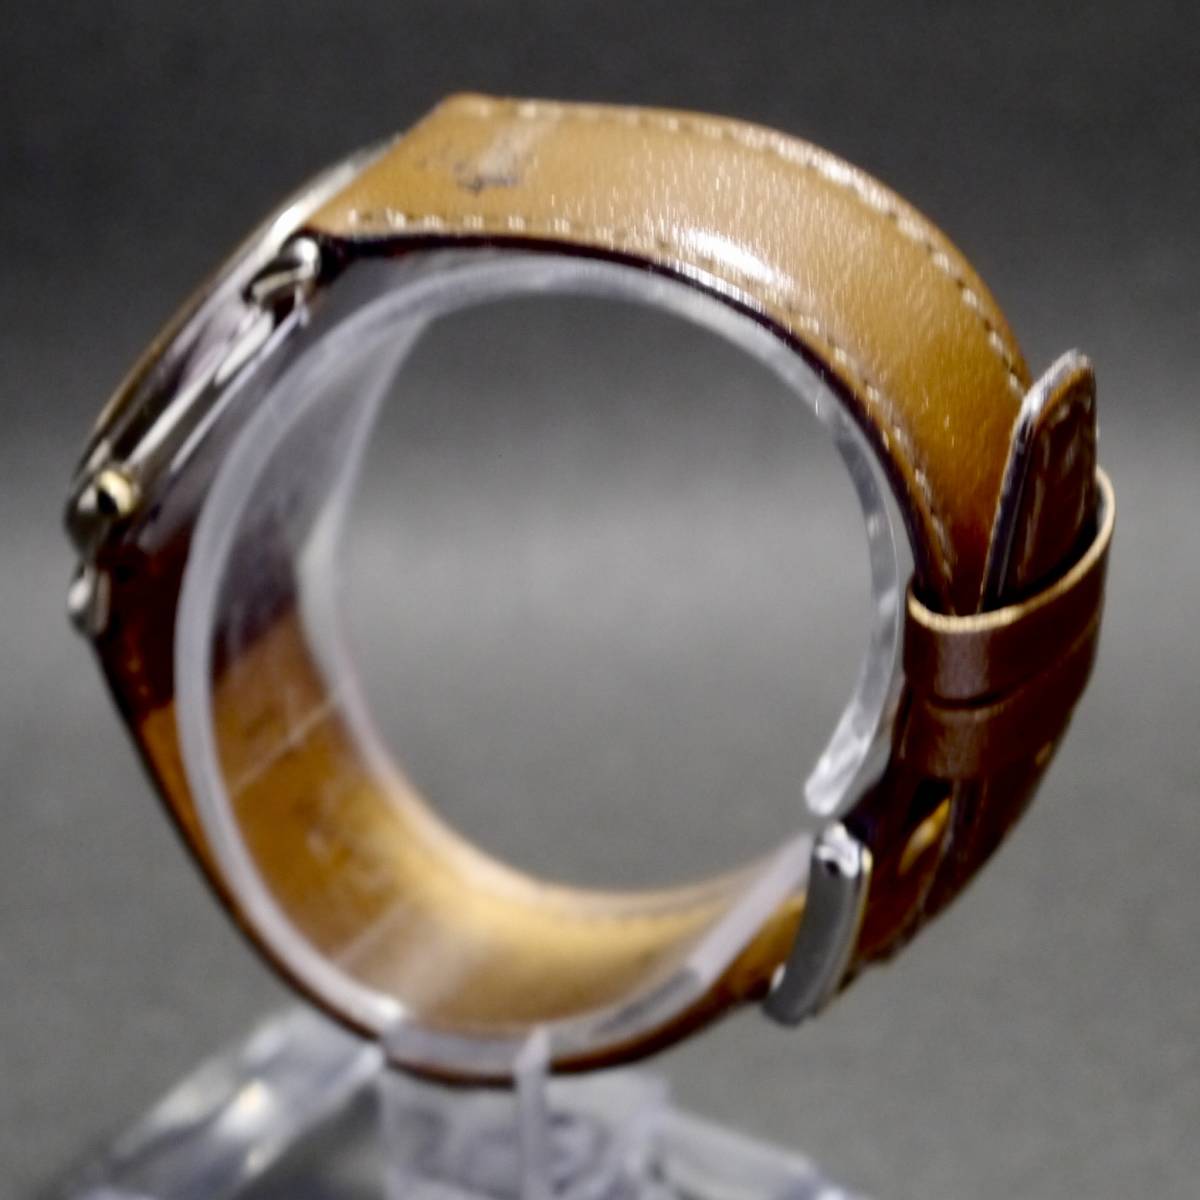  Seiko SEIKO wristwatch Dolce Dolce 8N41-6070 3 hands men's quartz operation goods 2311006